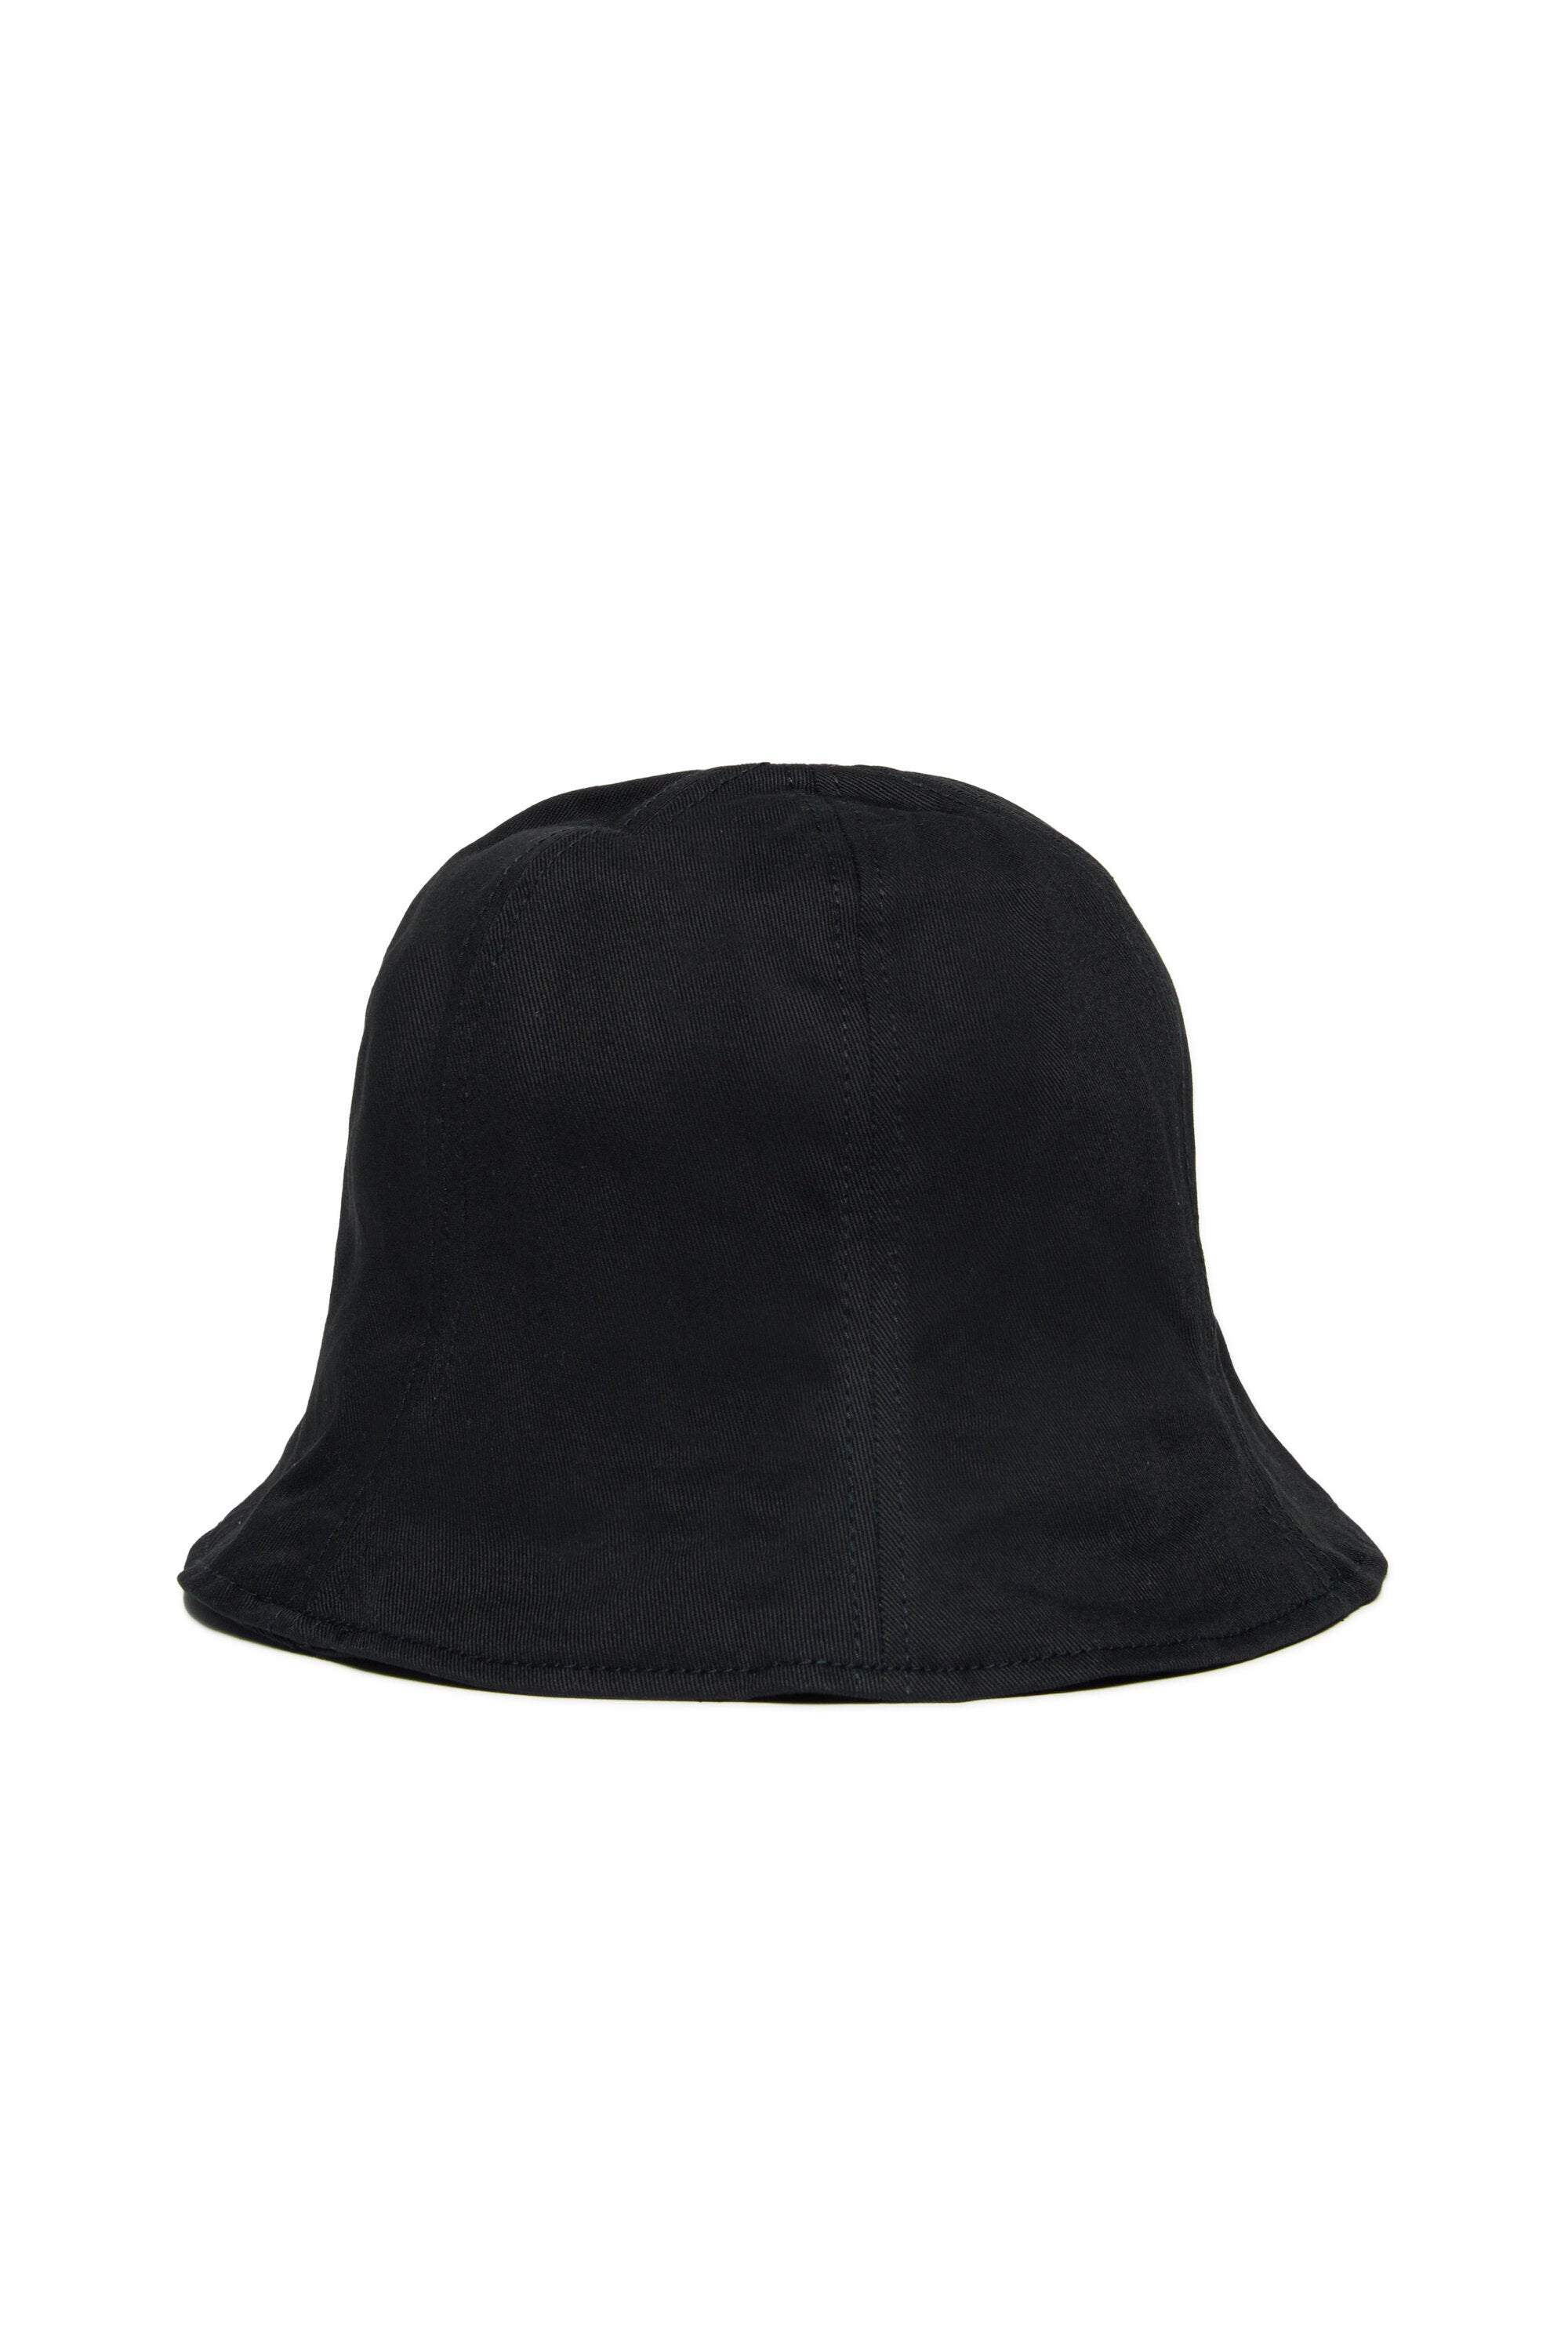 Oval D branded fisherman hat